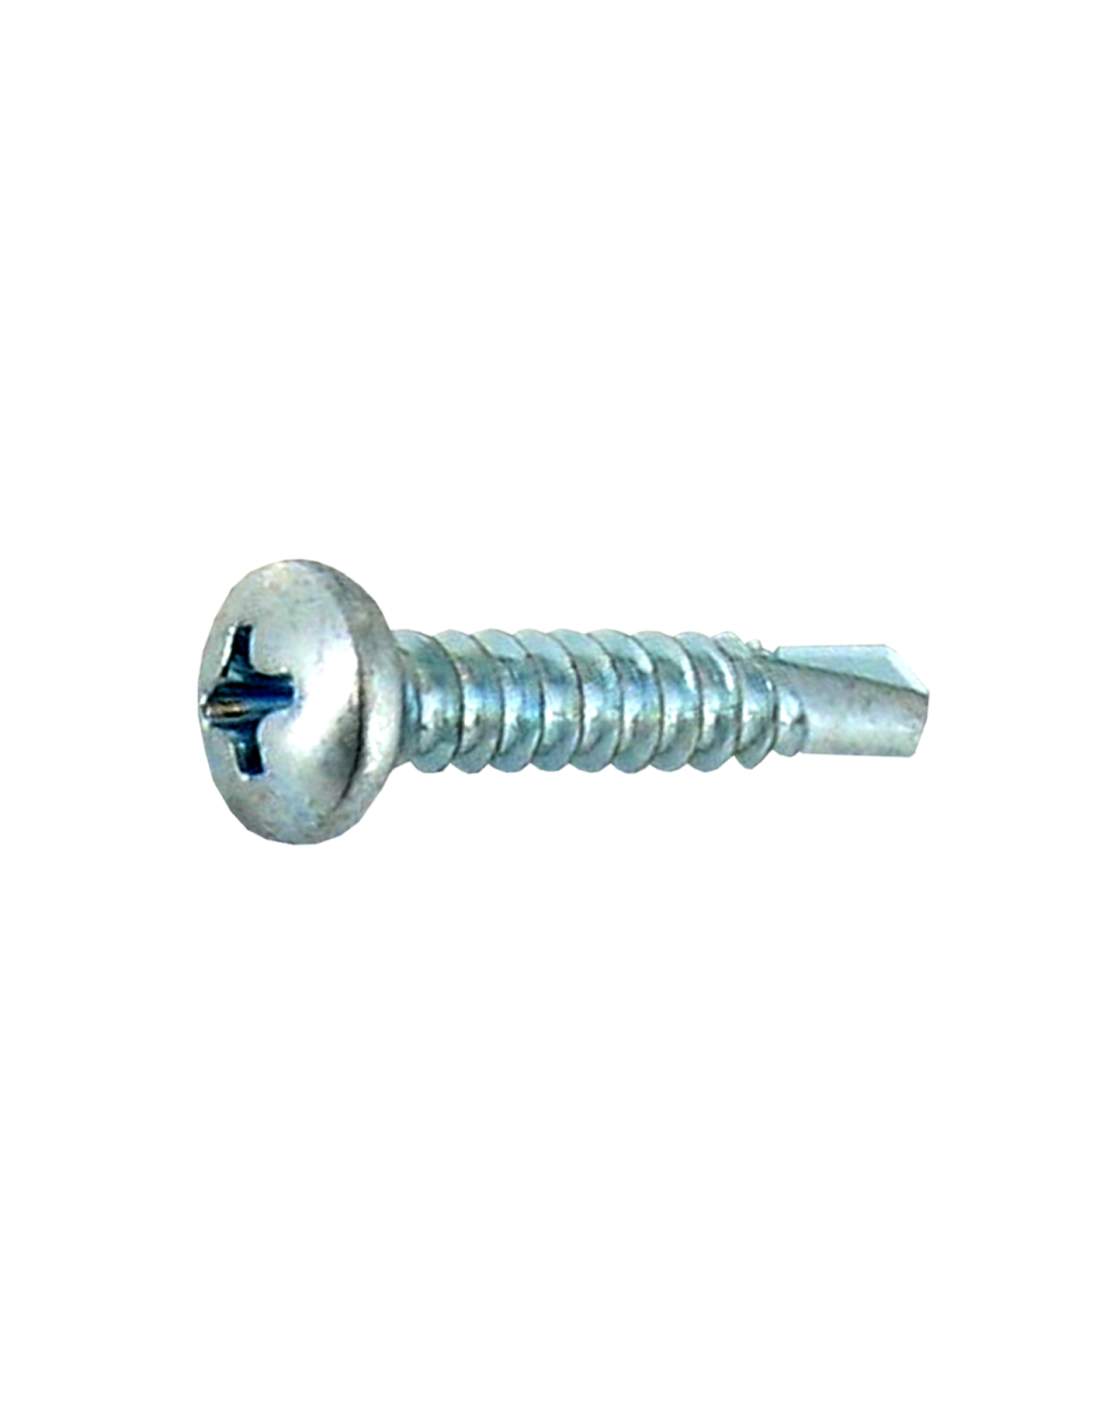 AZI 3.5x16 pan head self-drilling sheet metal screws, 29 pcs.